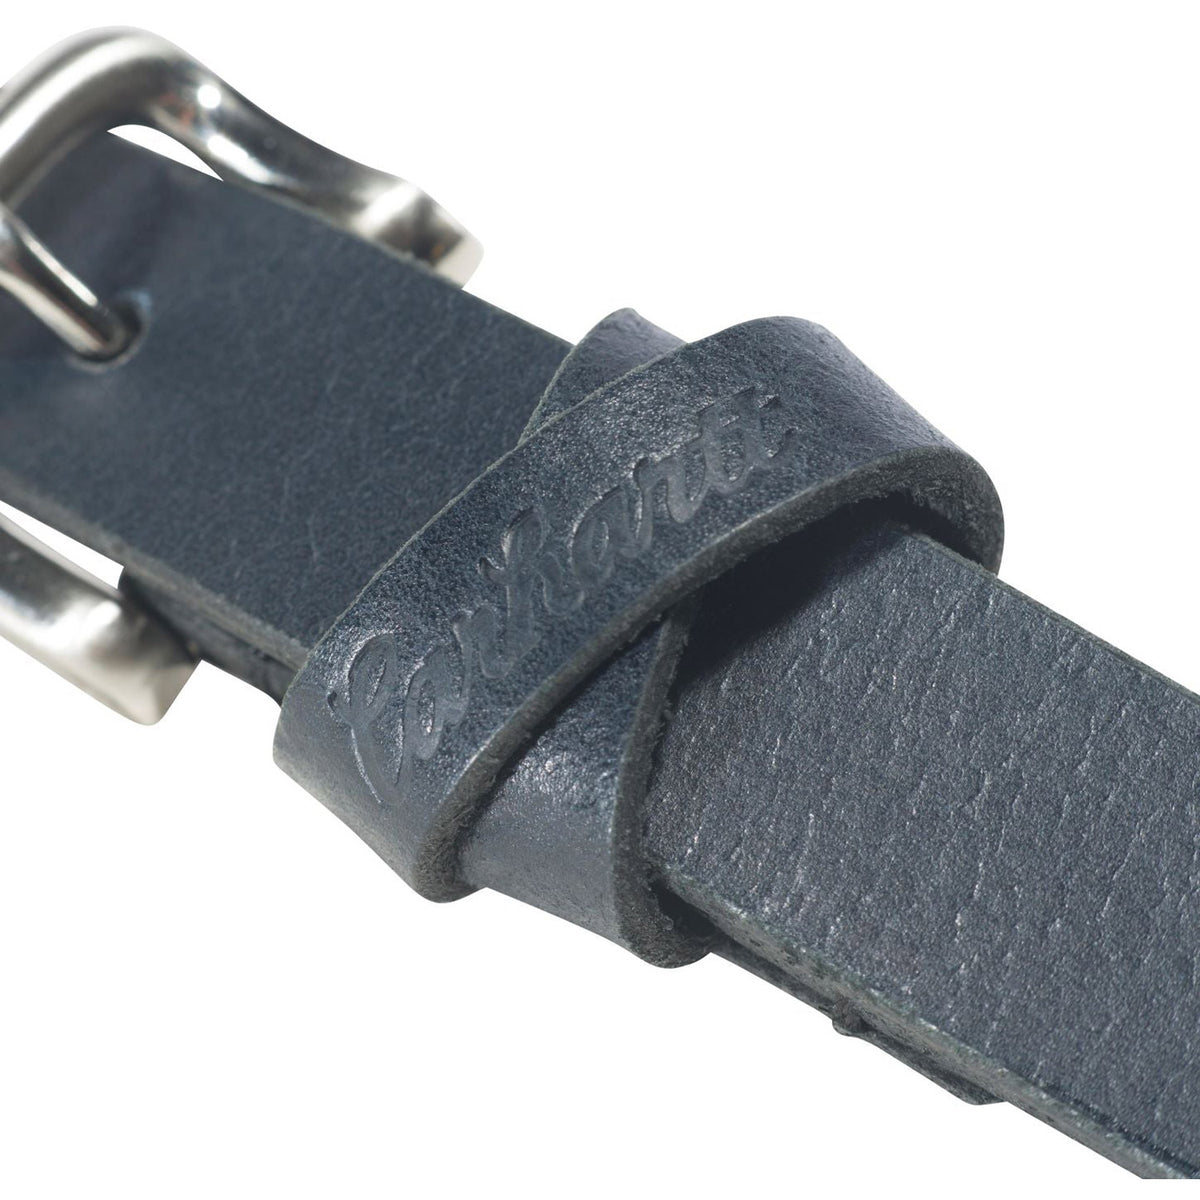 Carhartt (W) Bridle Leather Thin Belt - Work World - Workwear, Work Boots, Safety Gear